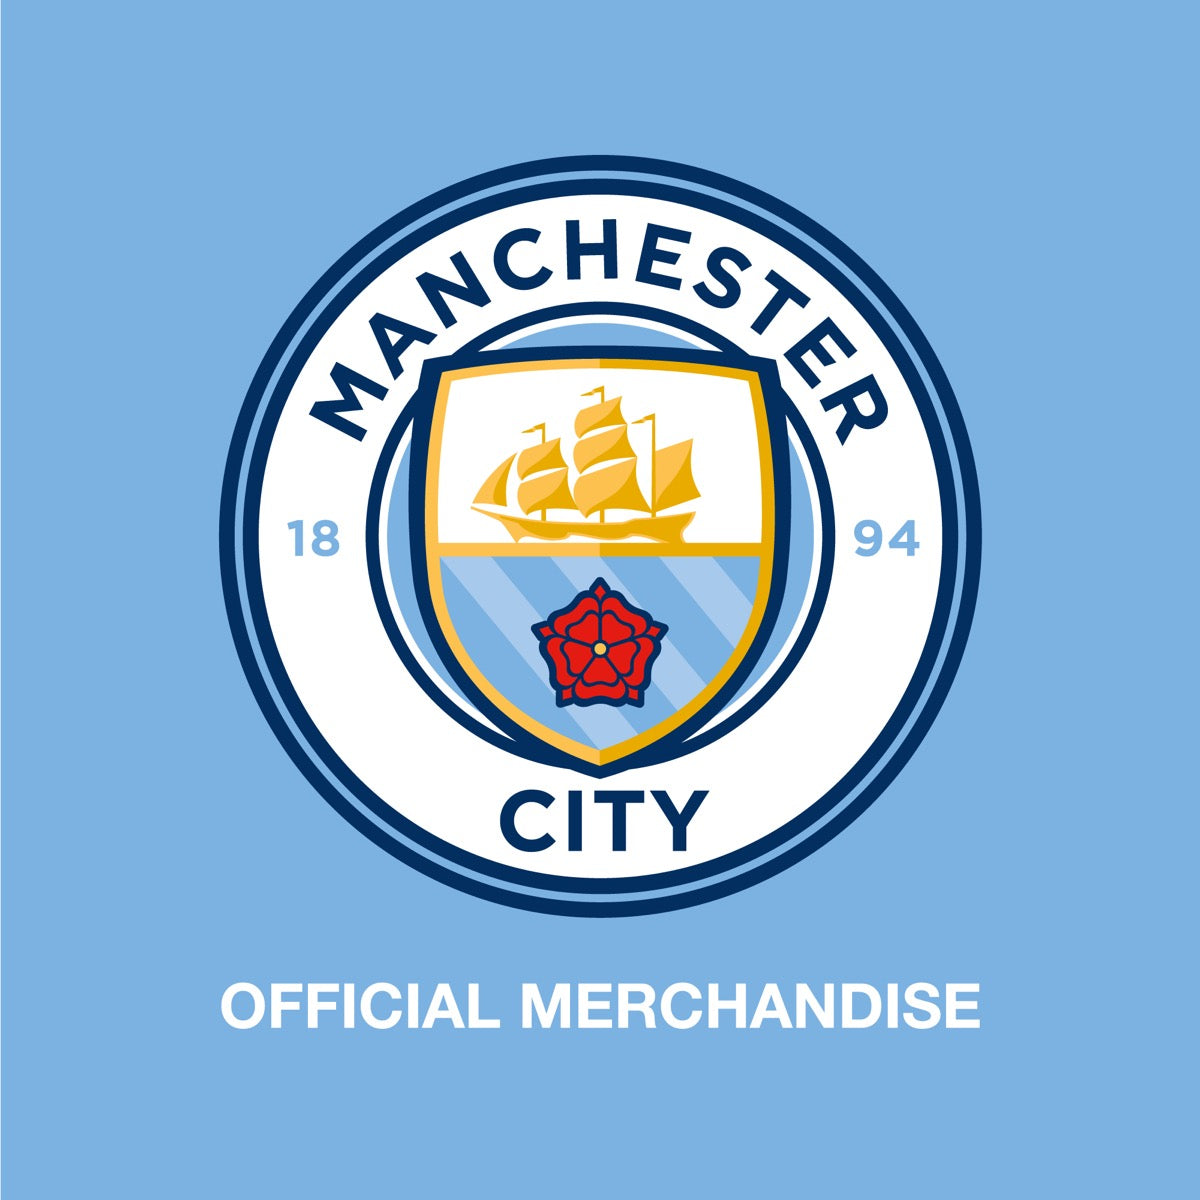 Manchester City Football Club - Night Time Corner Flag Broken Wall Sticker + Bonus Decal Set